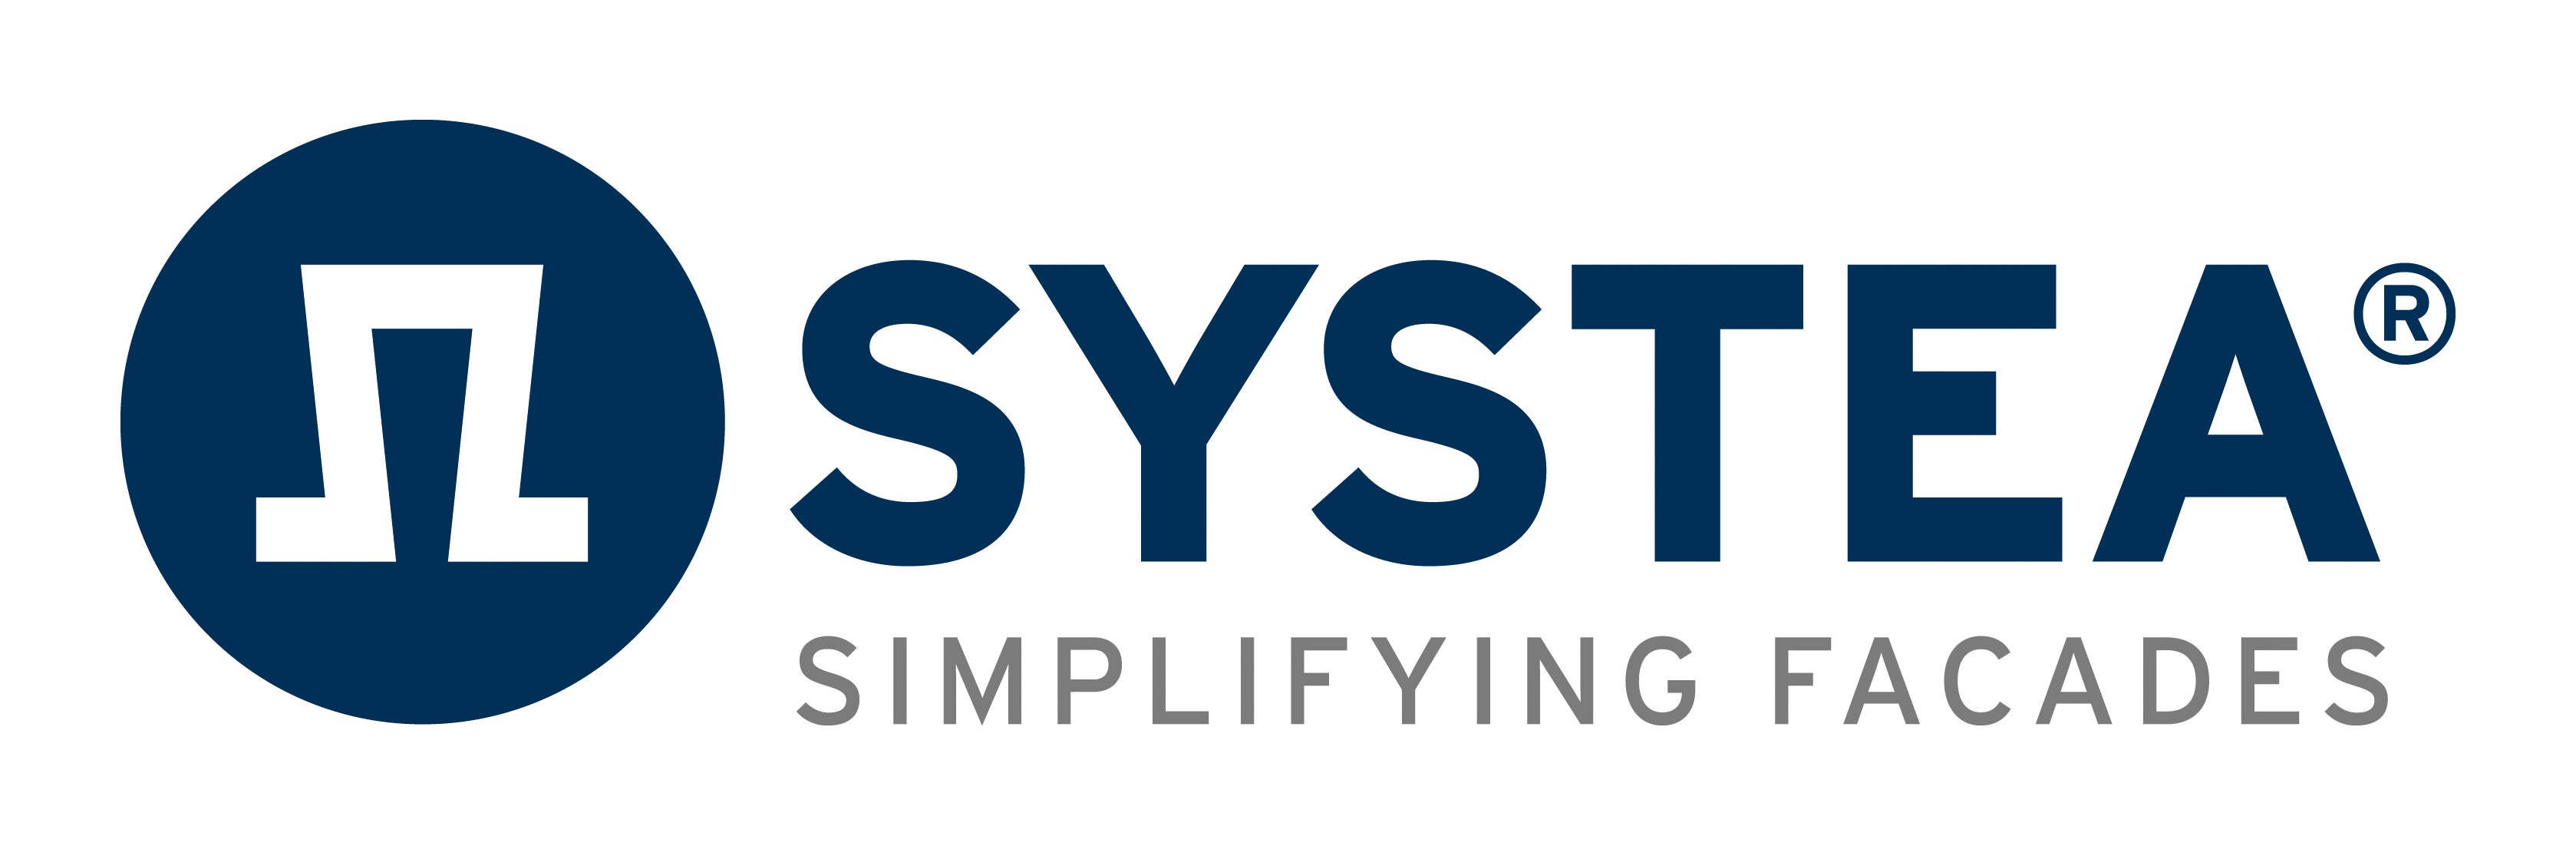 2019-11-11_Systea-Logo-komplett_farbig_RGB_Raster.jpg